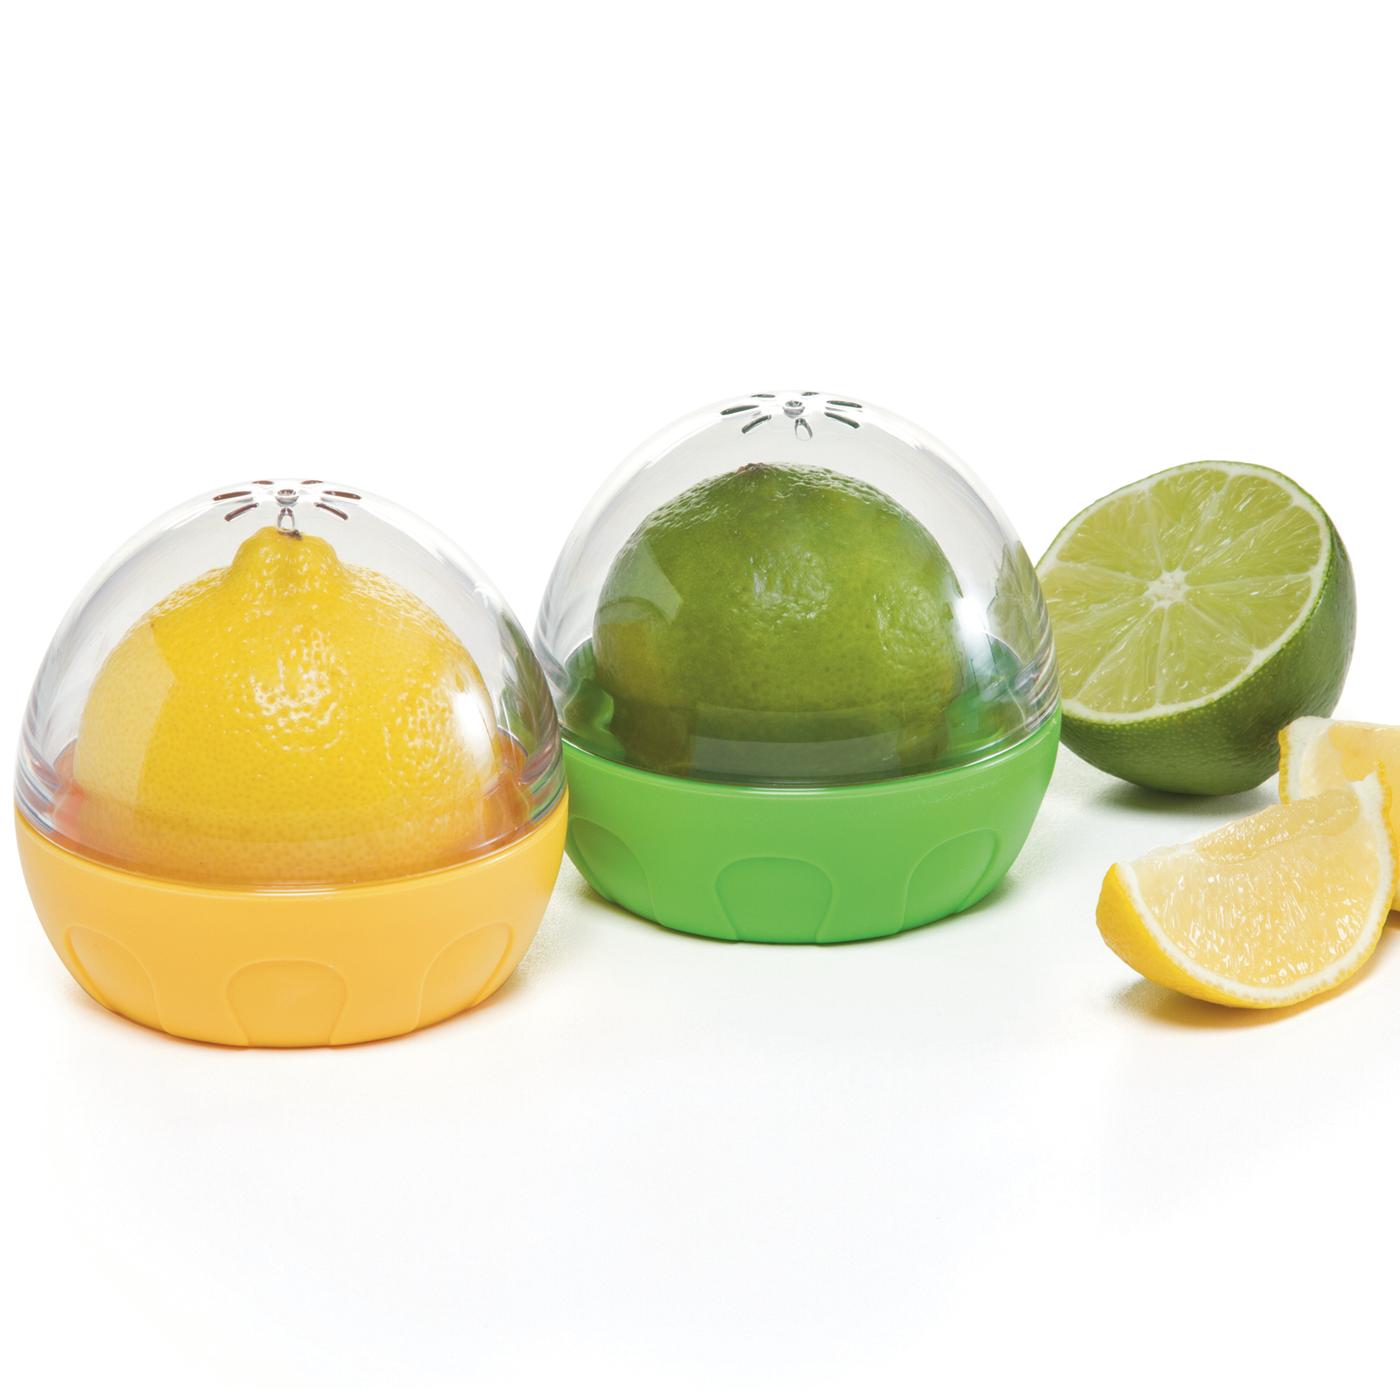 Progressive PrepWorks Citrus Keeper - Assorted; image 2 of 2